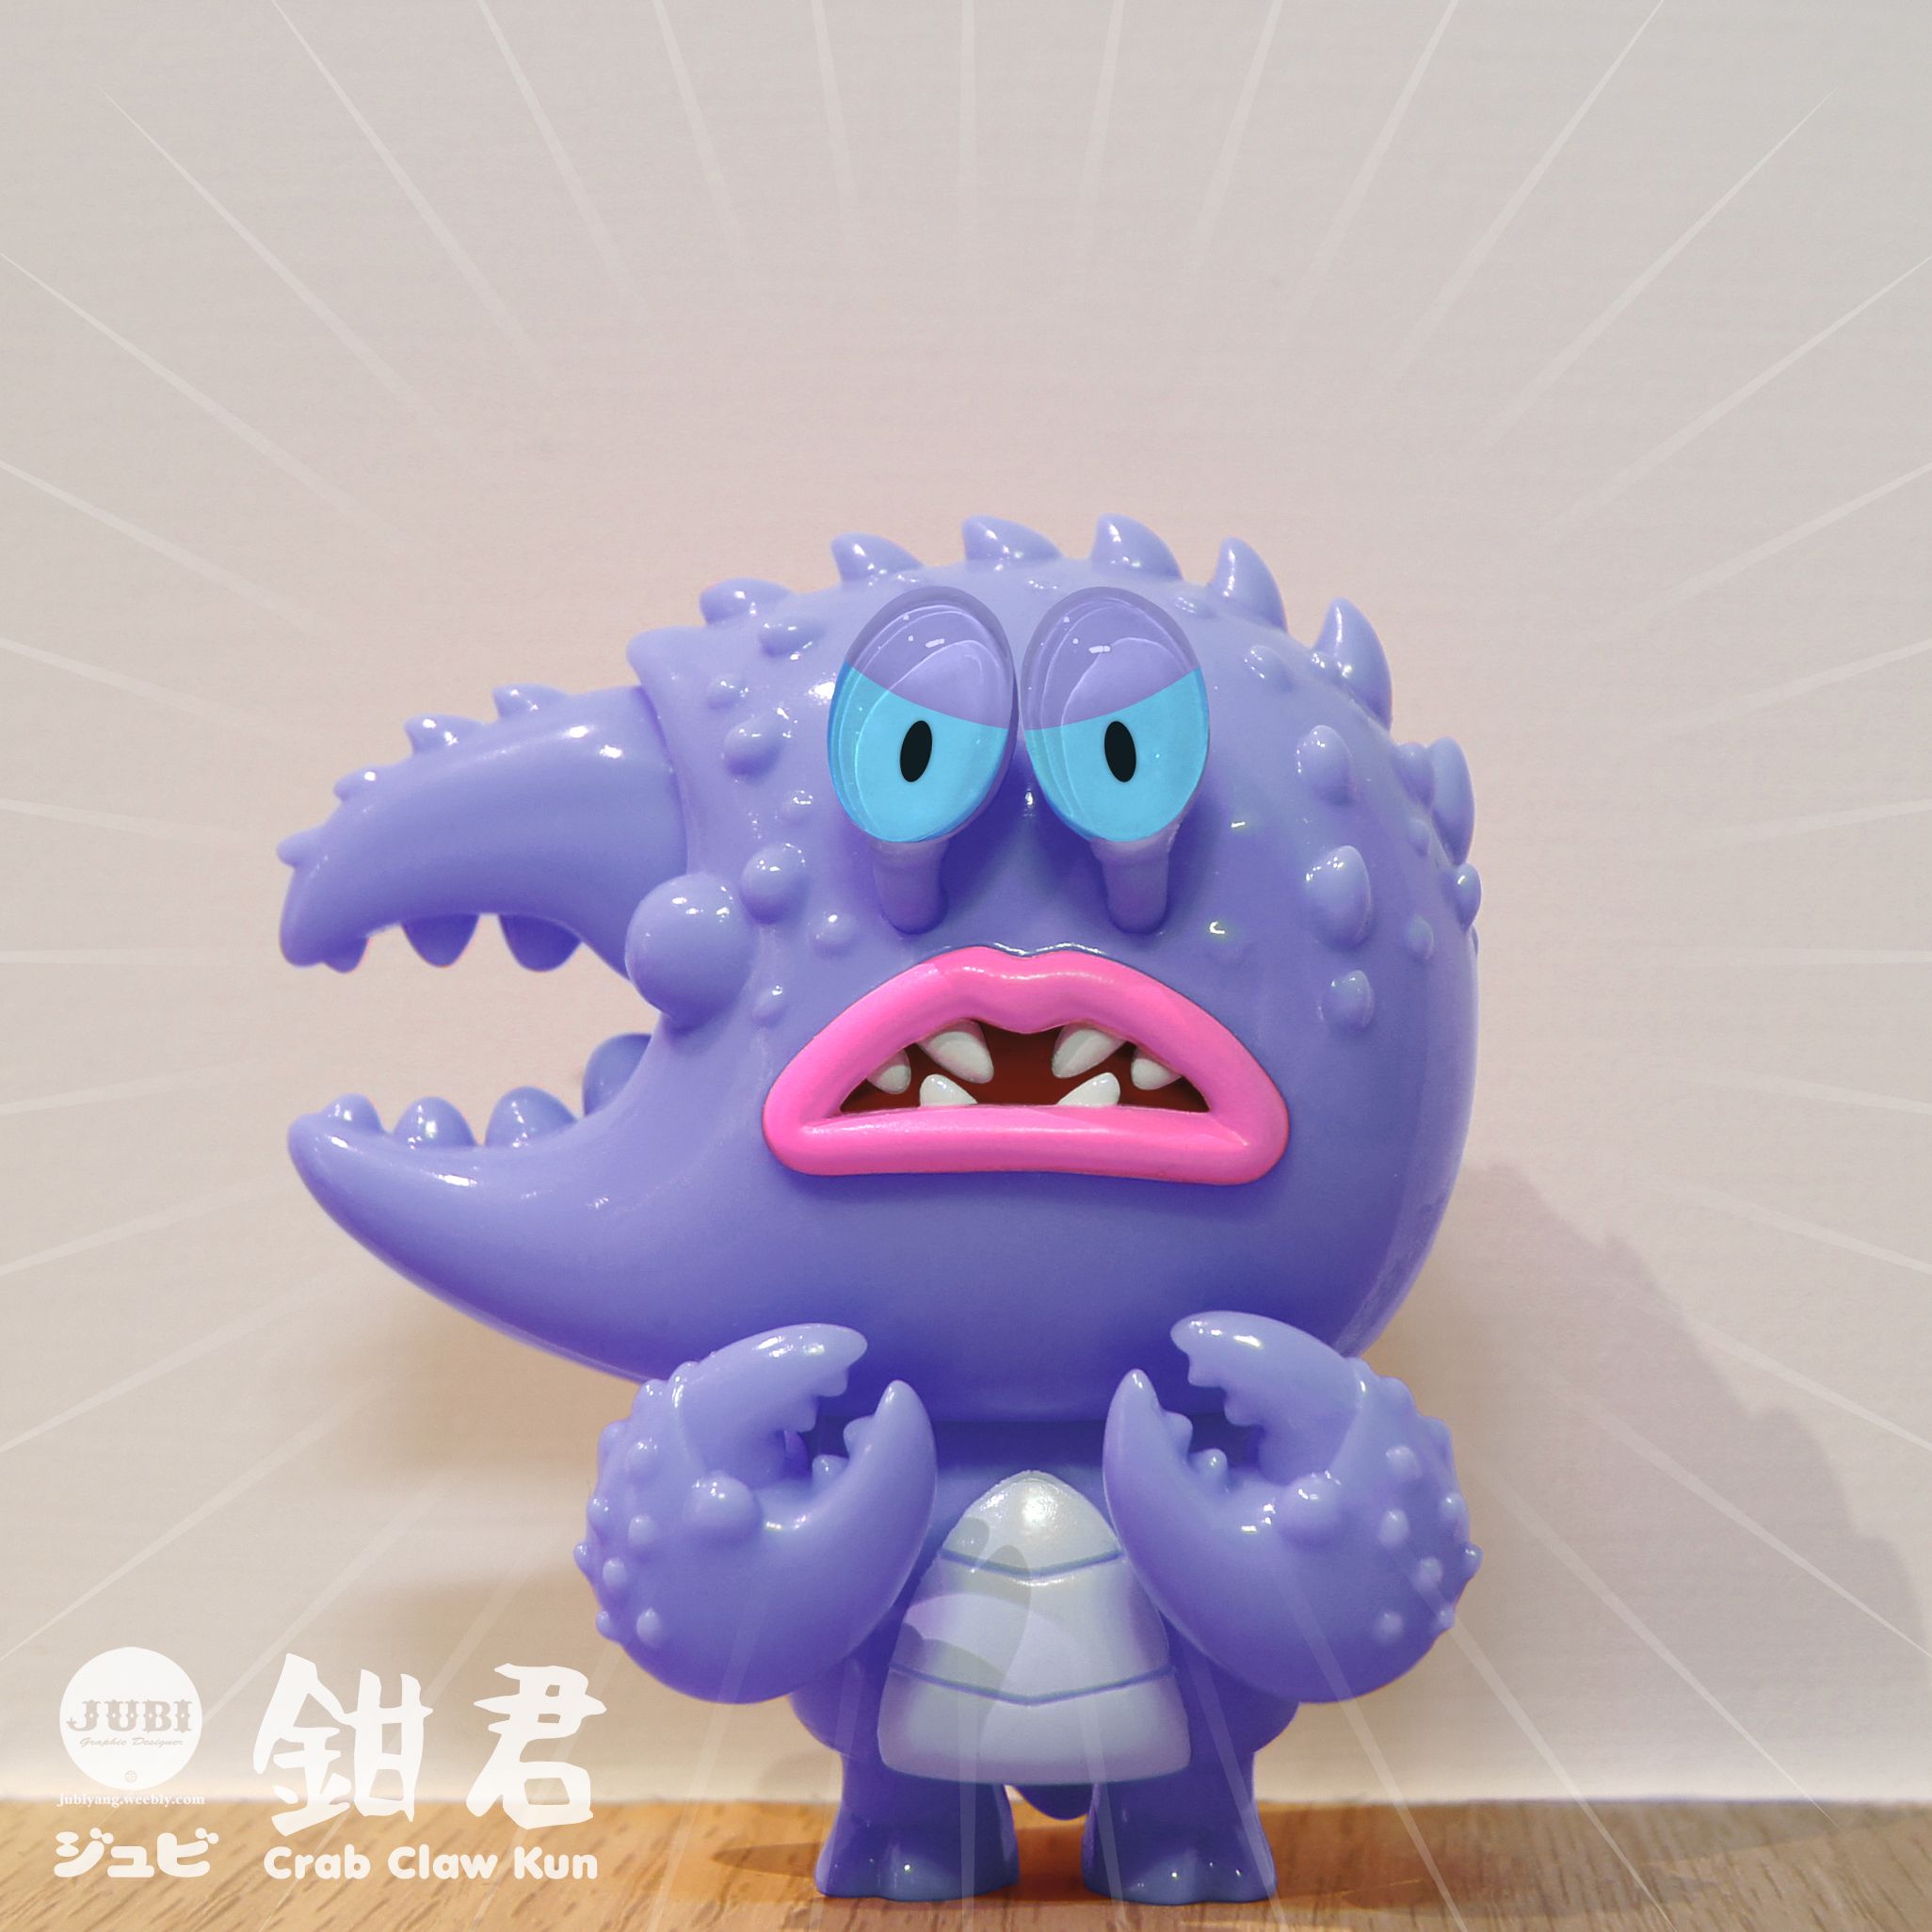 【鉗君】Crab Claw Kun Purple Ver. 紫色版、鉗太多 by JUBI